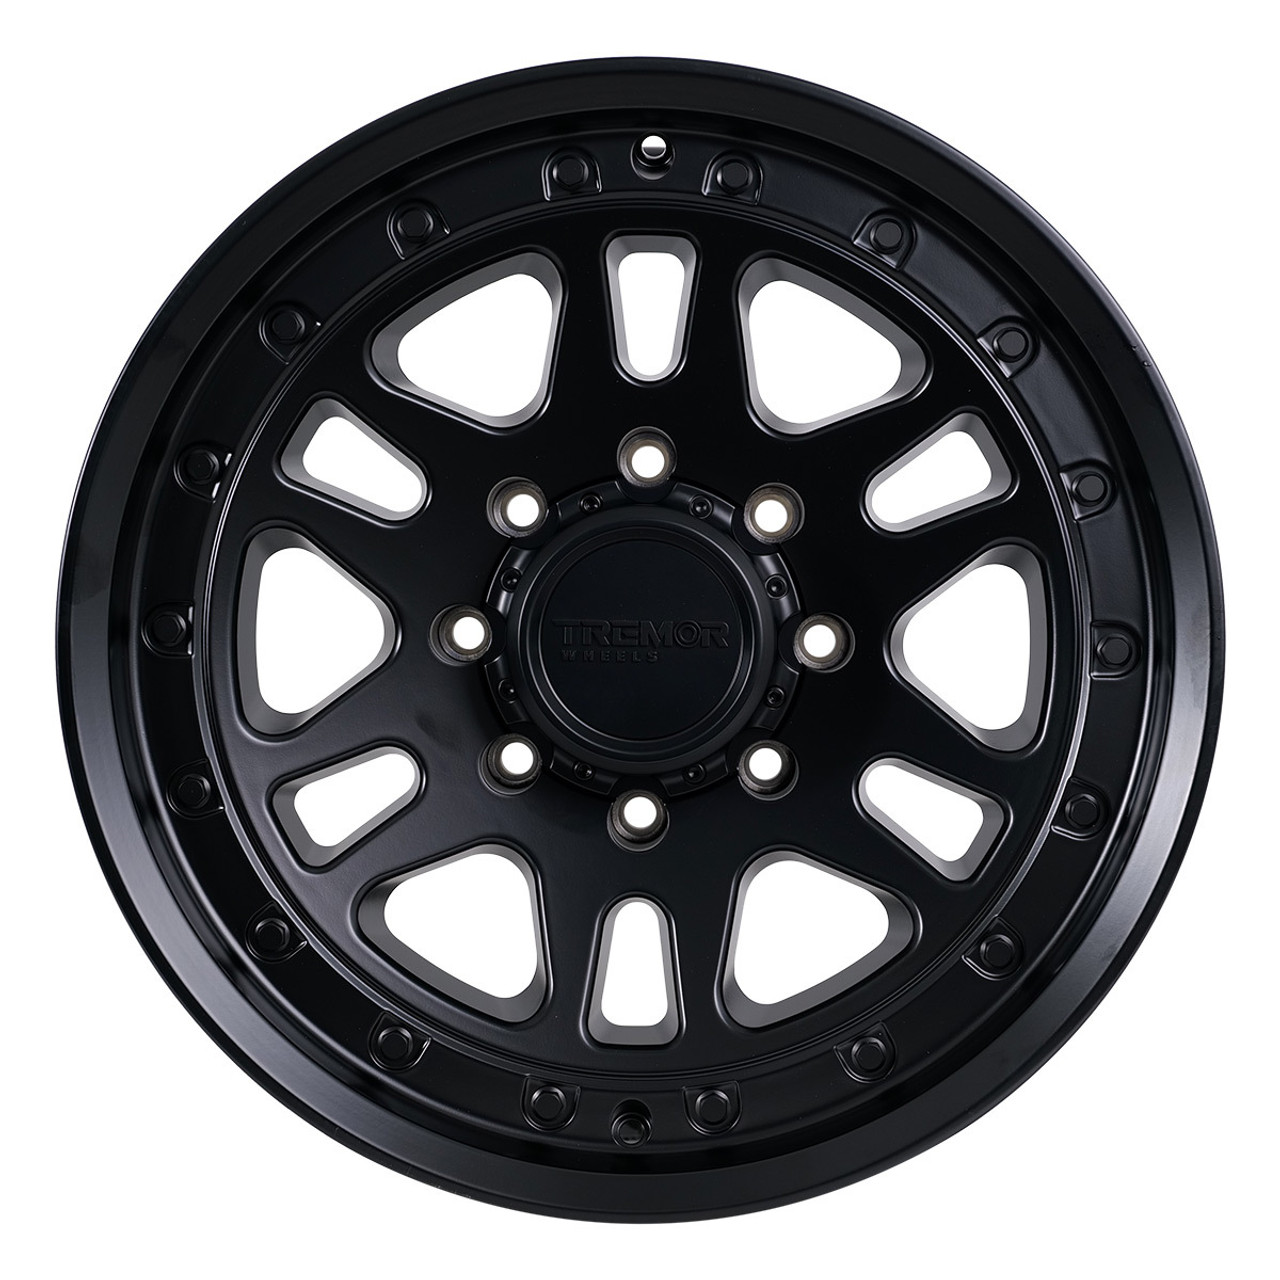 17" Tremor 105 Shaker Satin Black Wheel 17x8.5 6x135 0mm For Ford Linooln Rim